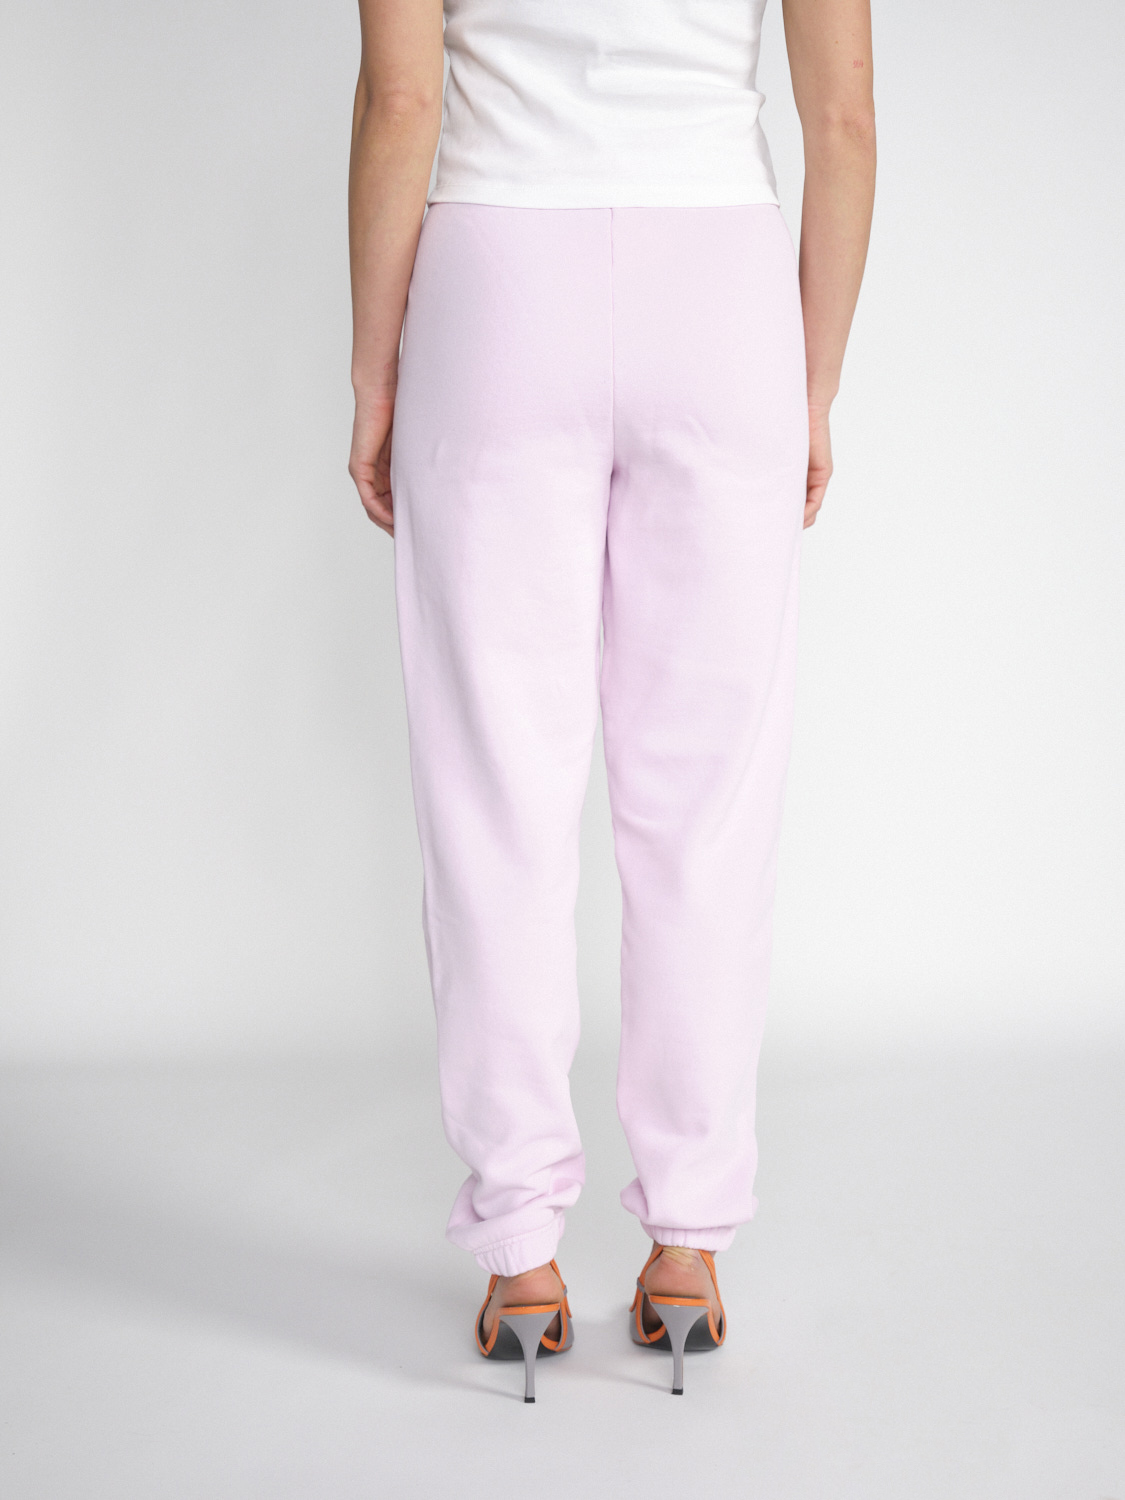 Coperni Pantalón de chándal deportivo en mezcla de algodón rosa S